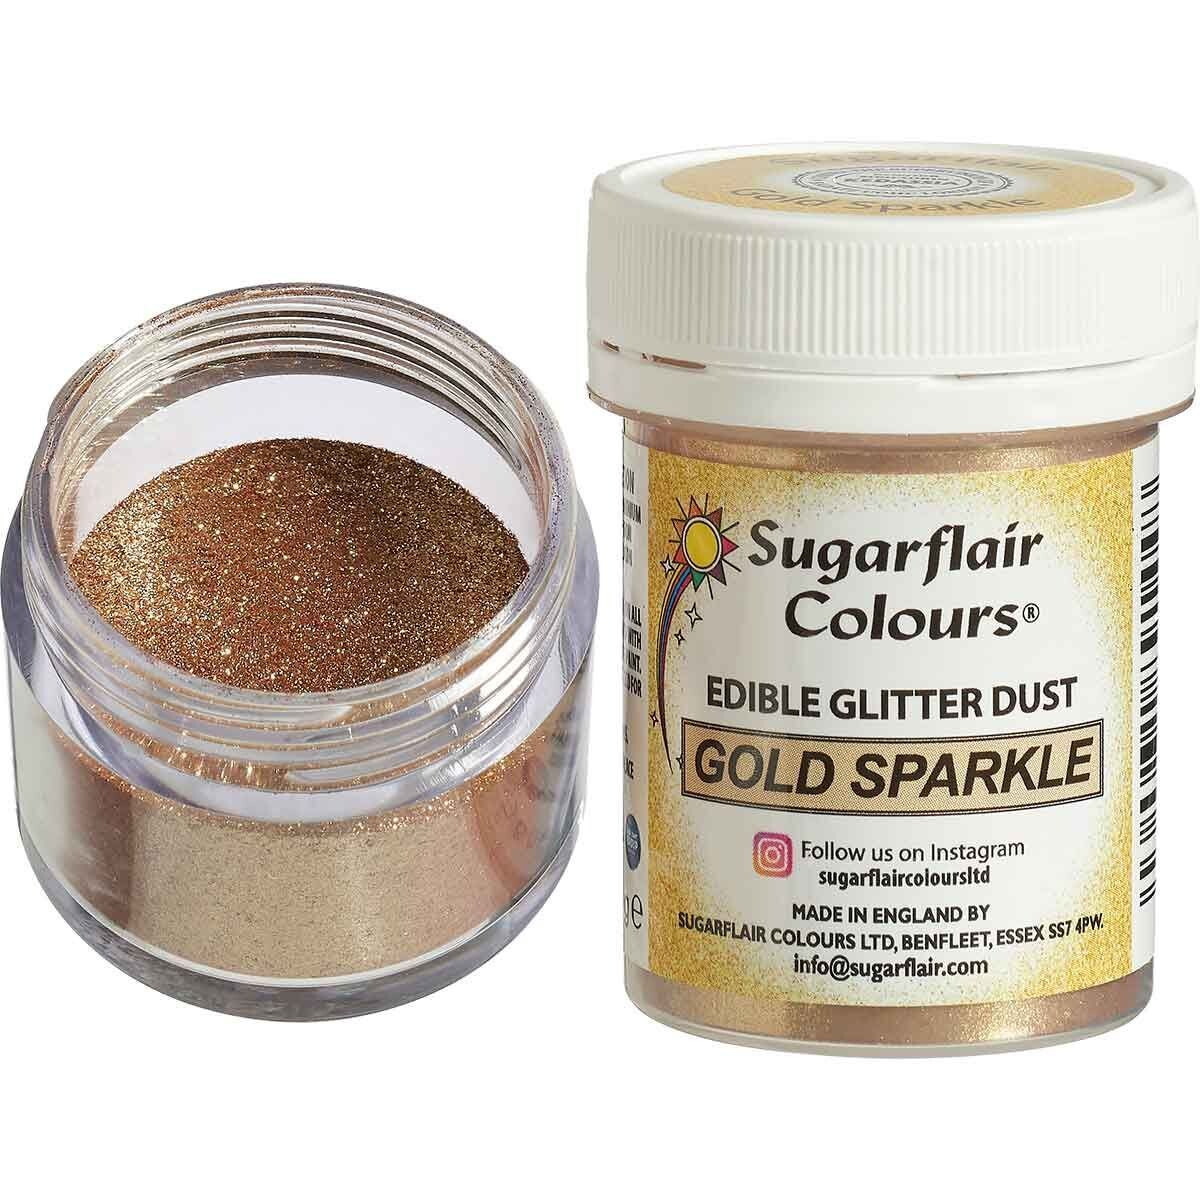 Sugarflair Edible GLITTER -GOLD SPARKLE - Βρώσιμη Σκόνη Γκλίτερ Μεταλλική Χρυσή  10γρ